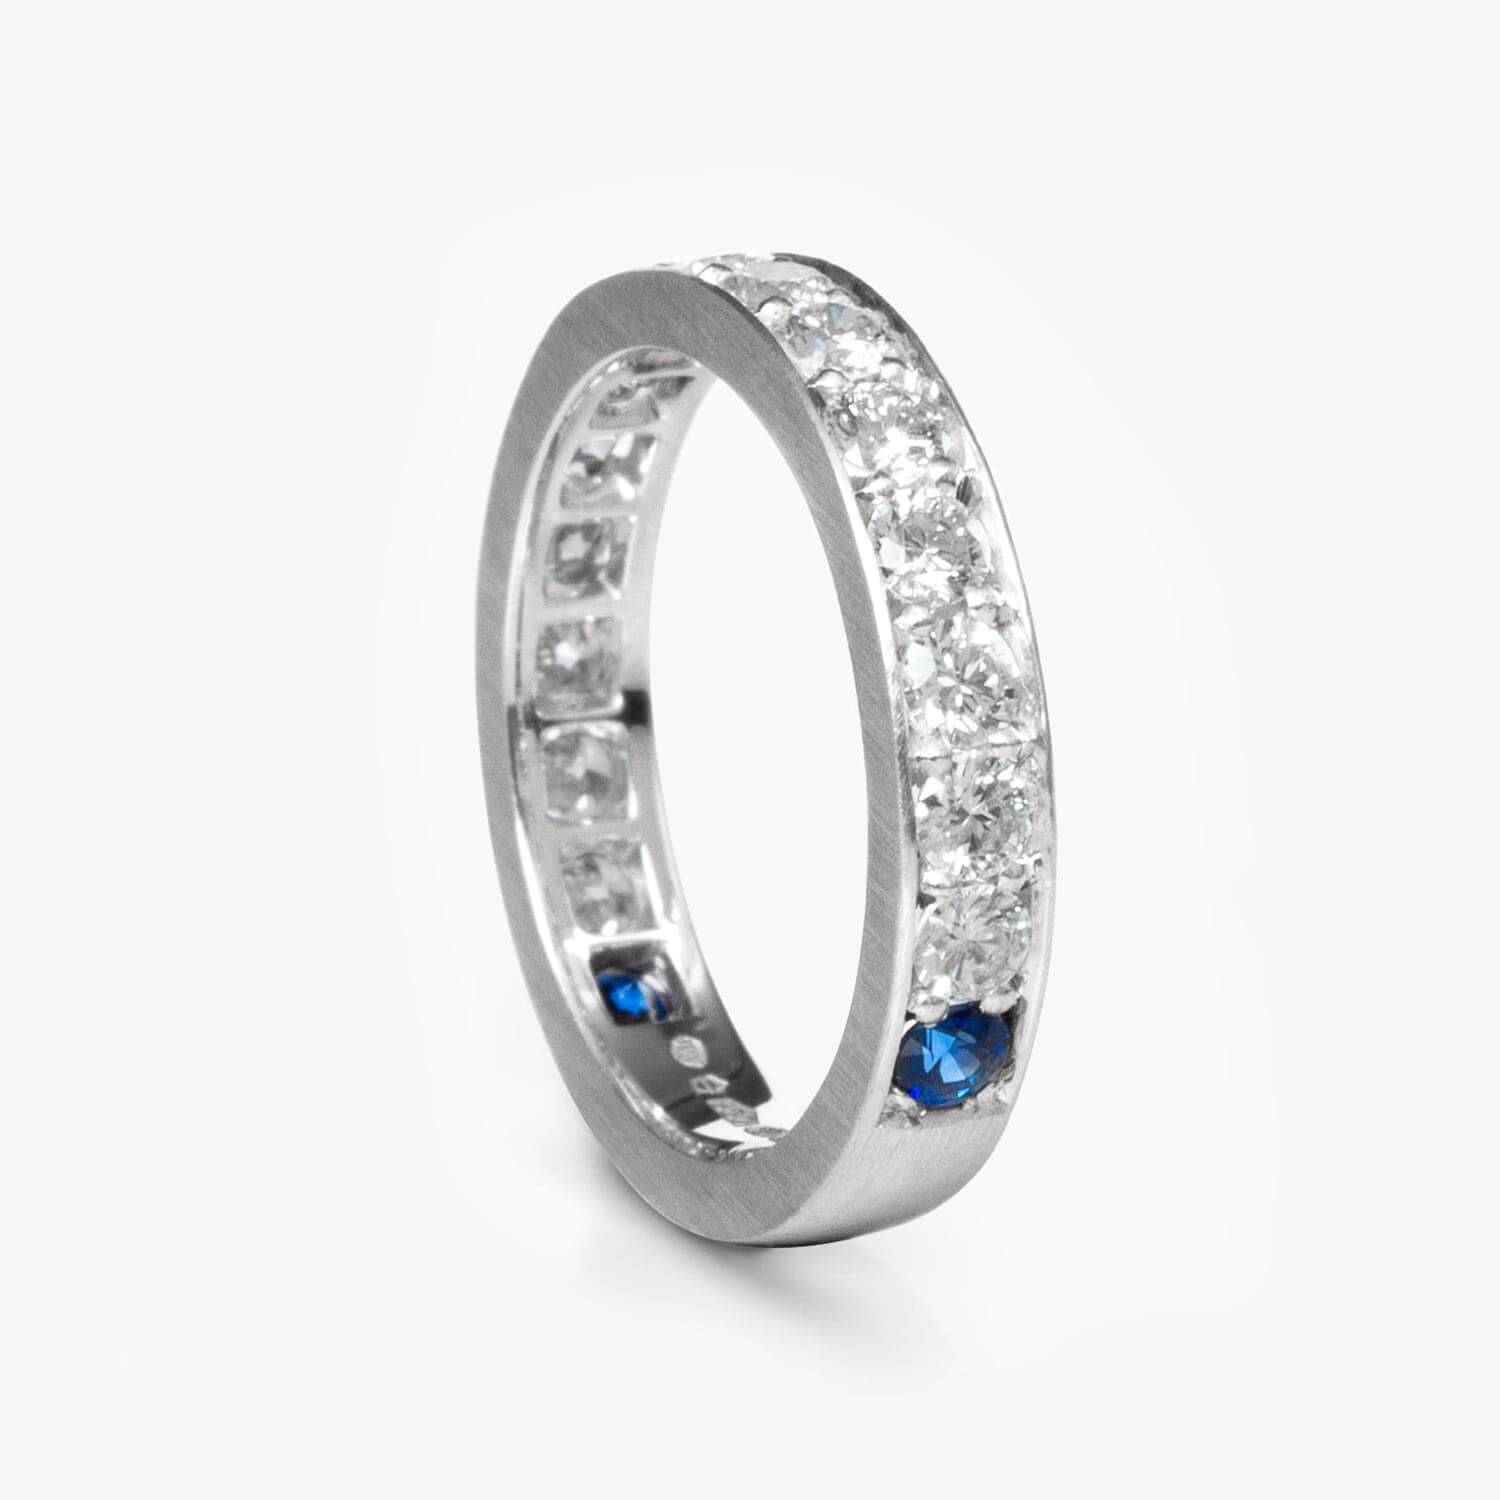 Richard’s Bespoke Diamond and Sapphire Eternity Ring